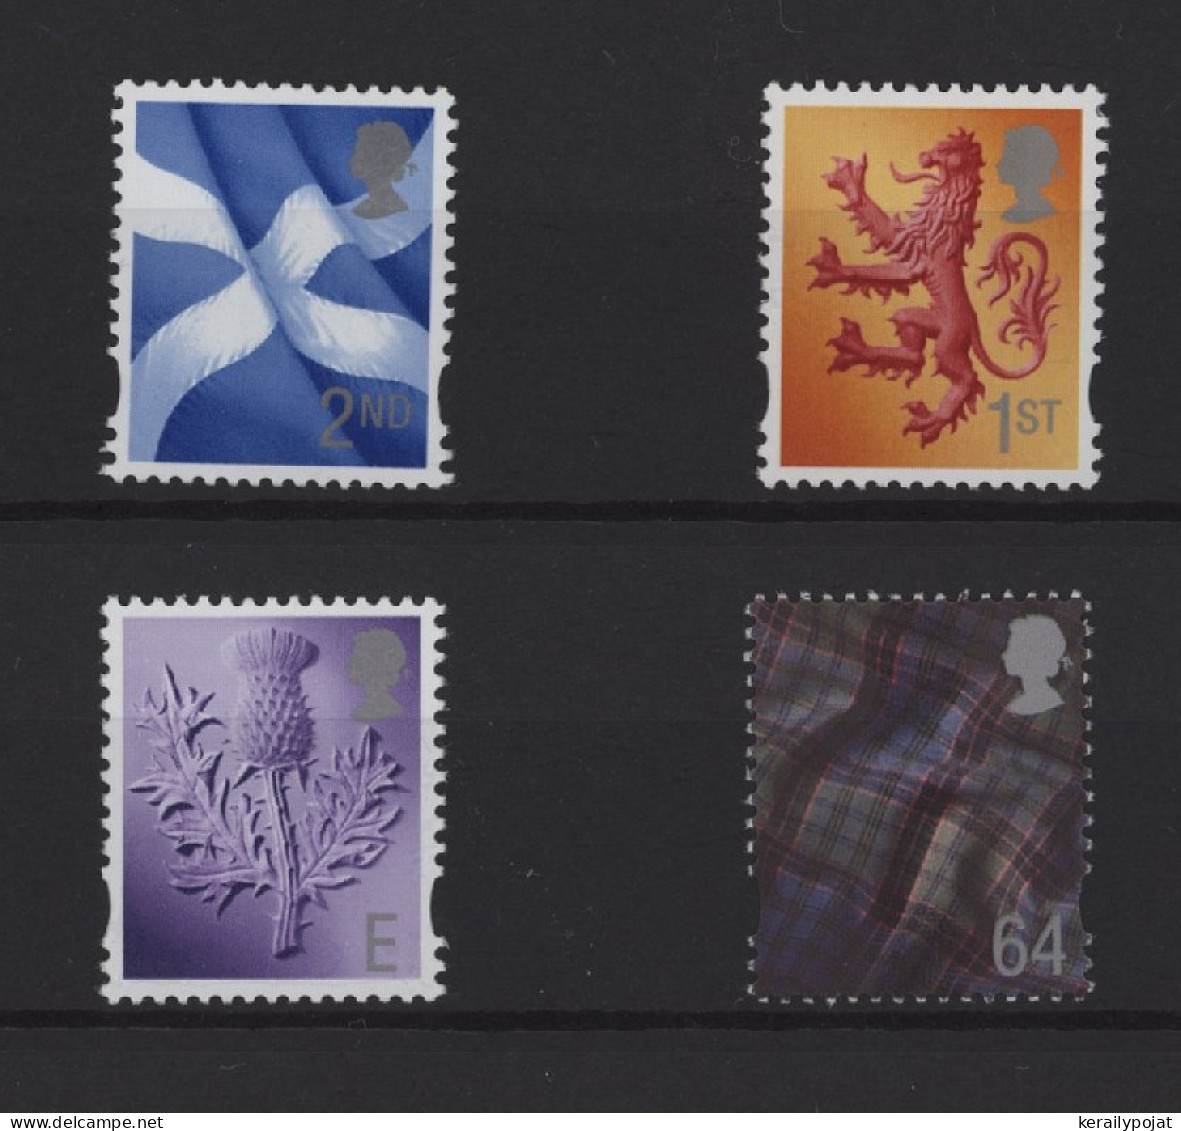 Scotland - 2003 National Symbols MNH__(TH-25852) - Scozia